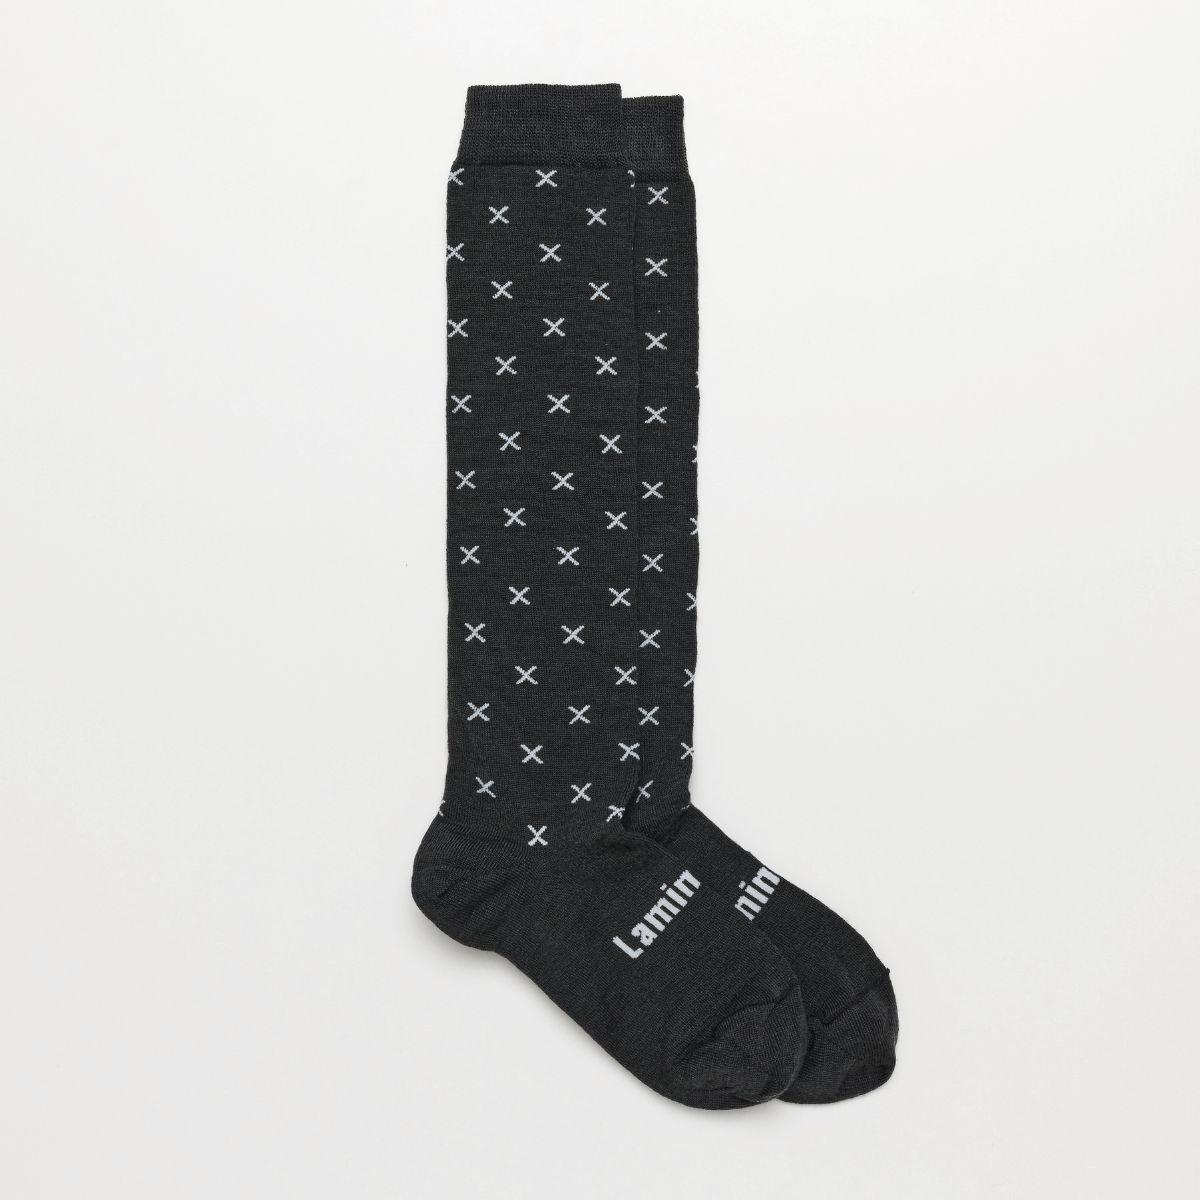 merino wool socks women grey nz aus knee-high